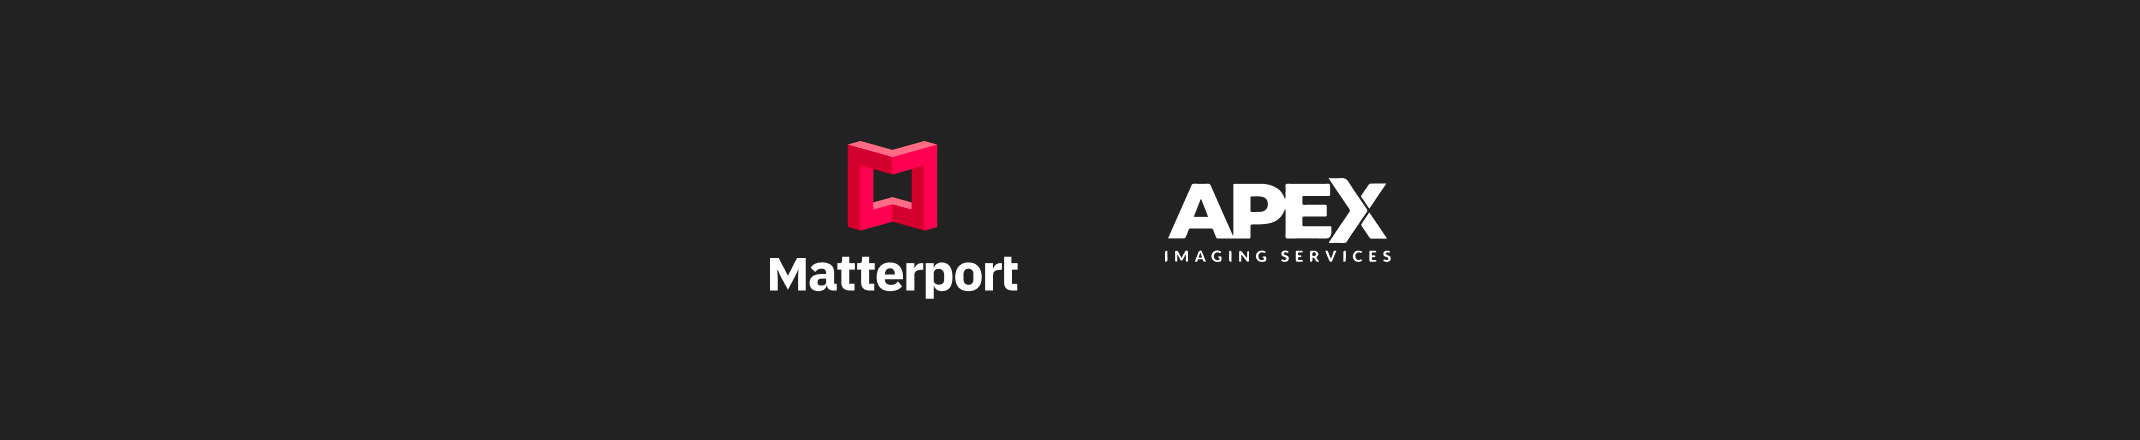 Matterport and Apex Logos